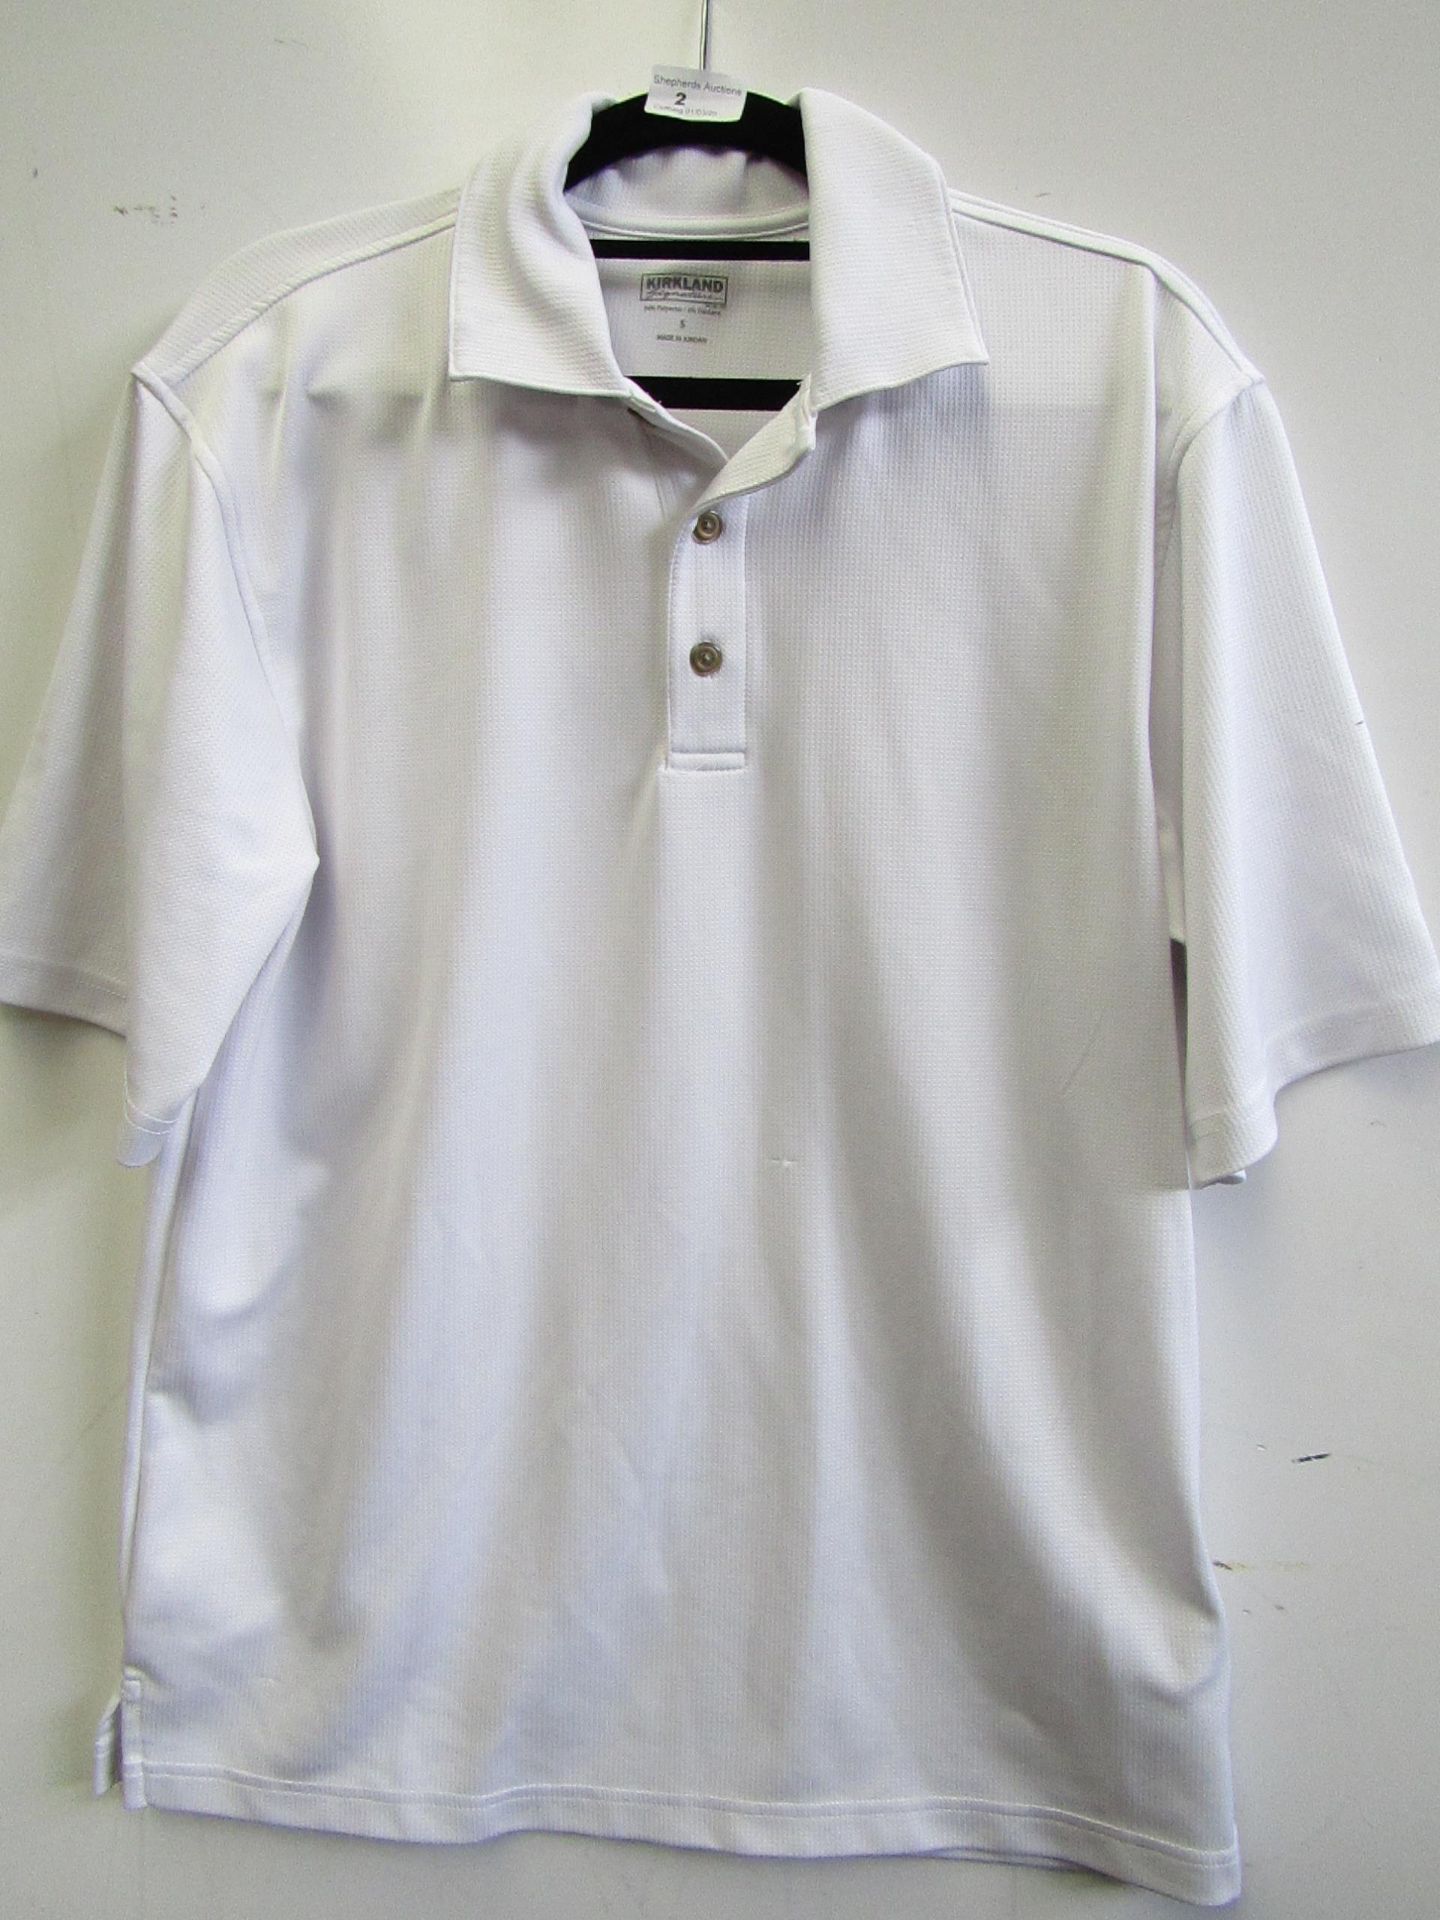 Kirkland Signature Mens Performance Polo Shirt size S new